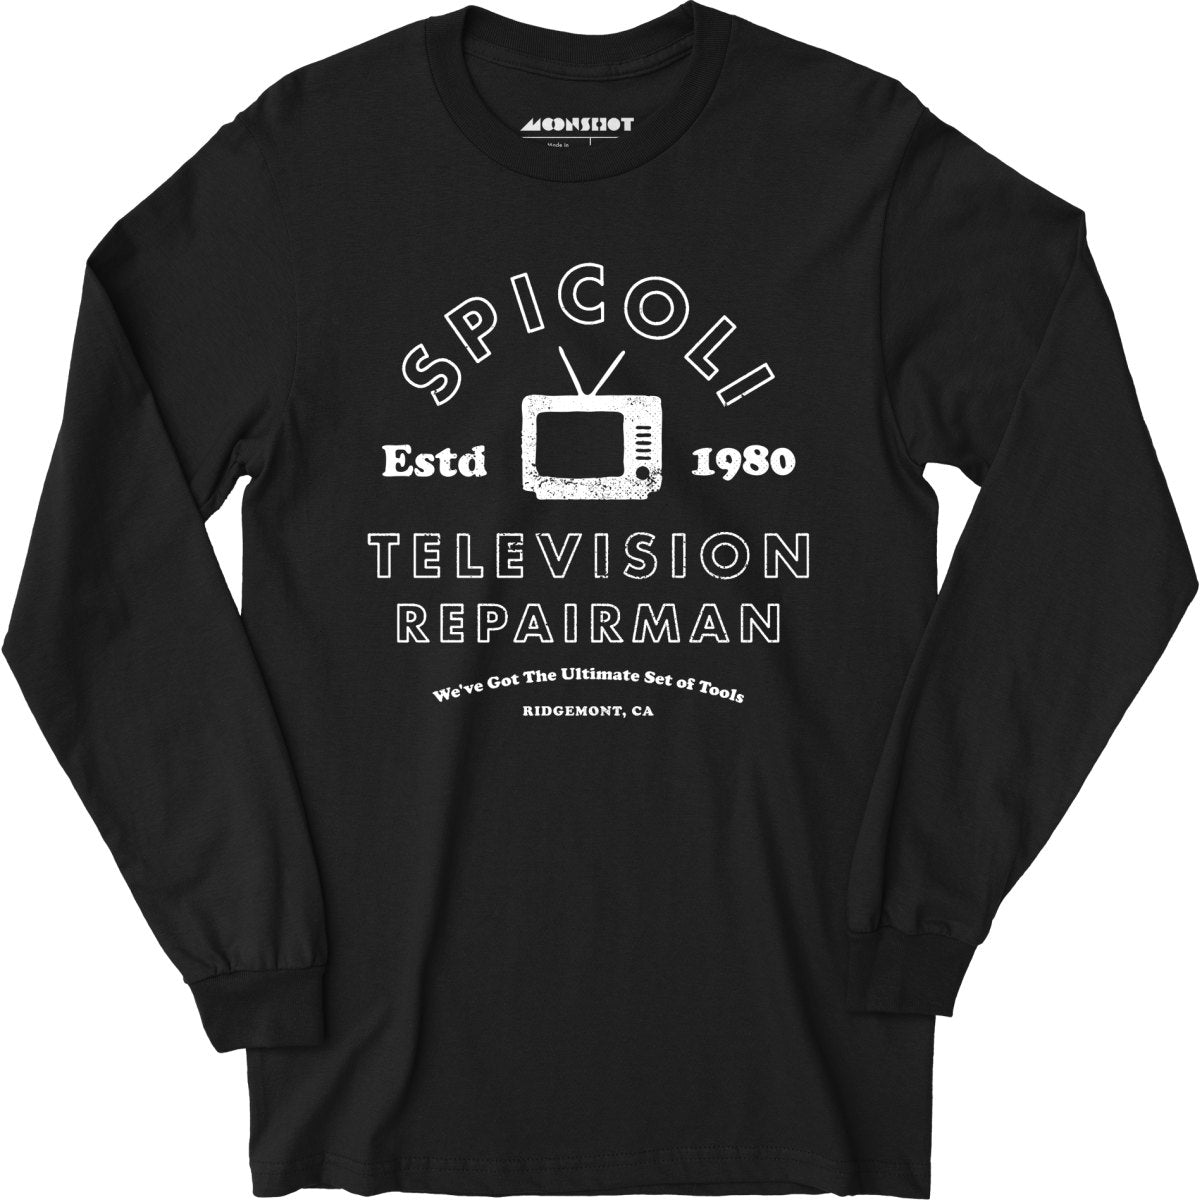 Spicoli Television Repairman - Long Sleeve T-Shirt